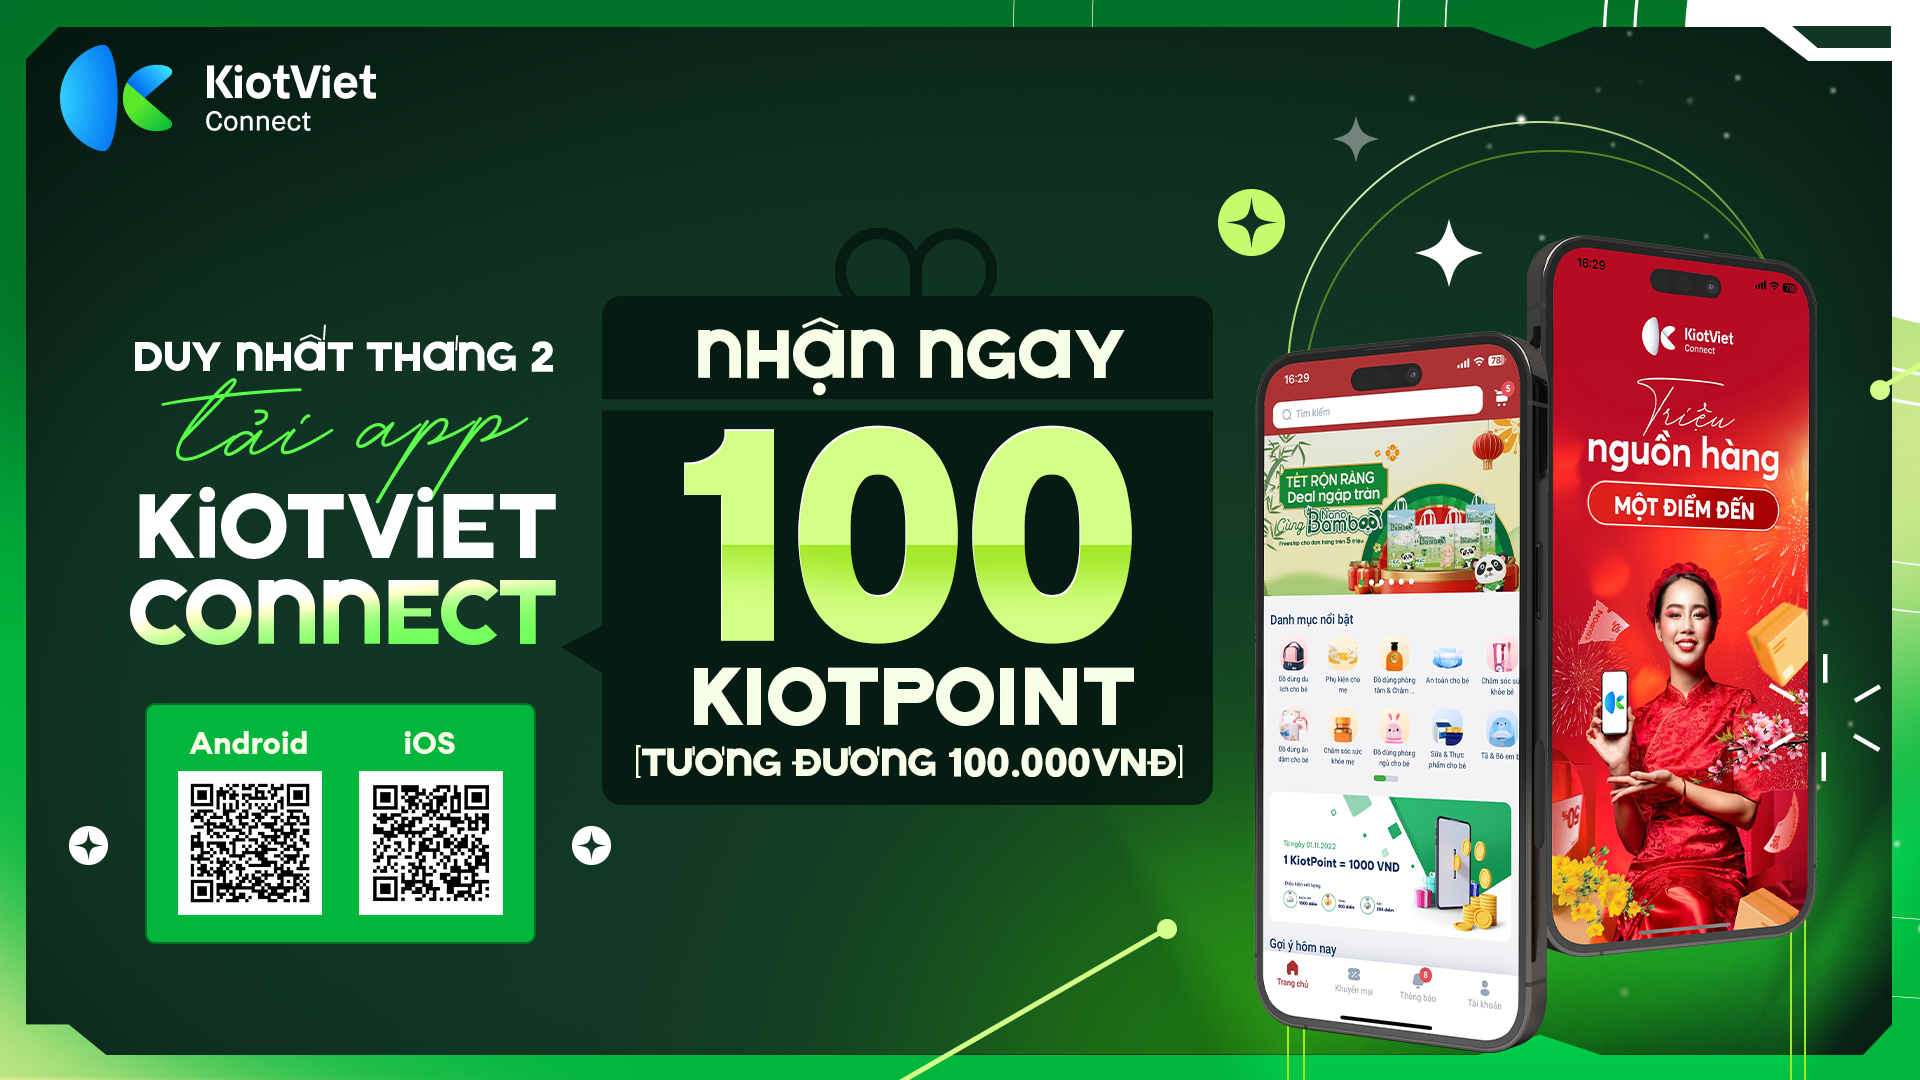 Nhận ngay 100 KiotPoint khi tải app KiotViet Connect